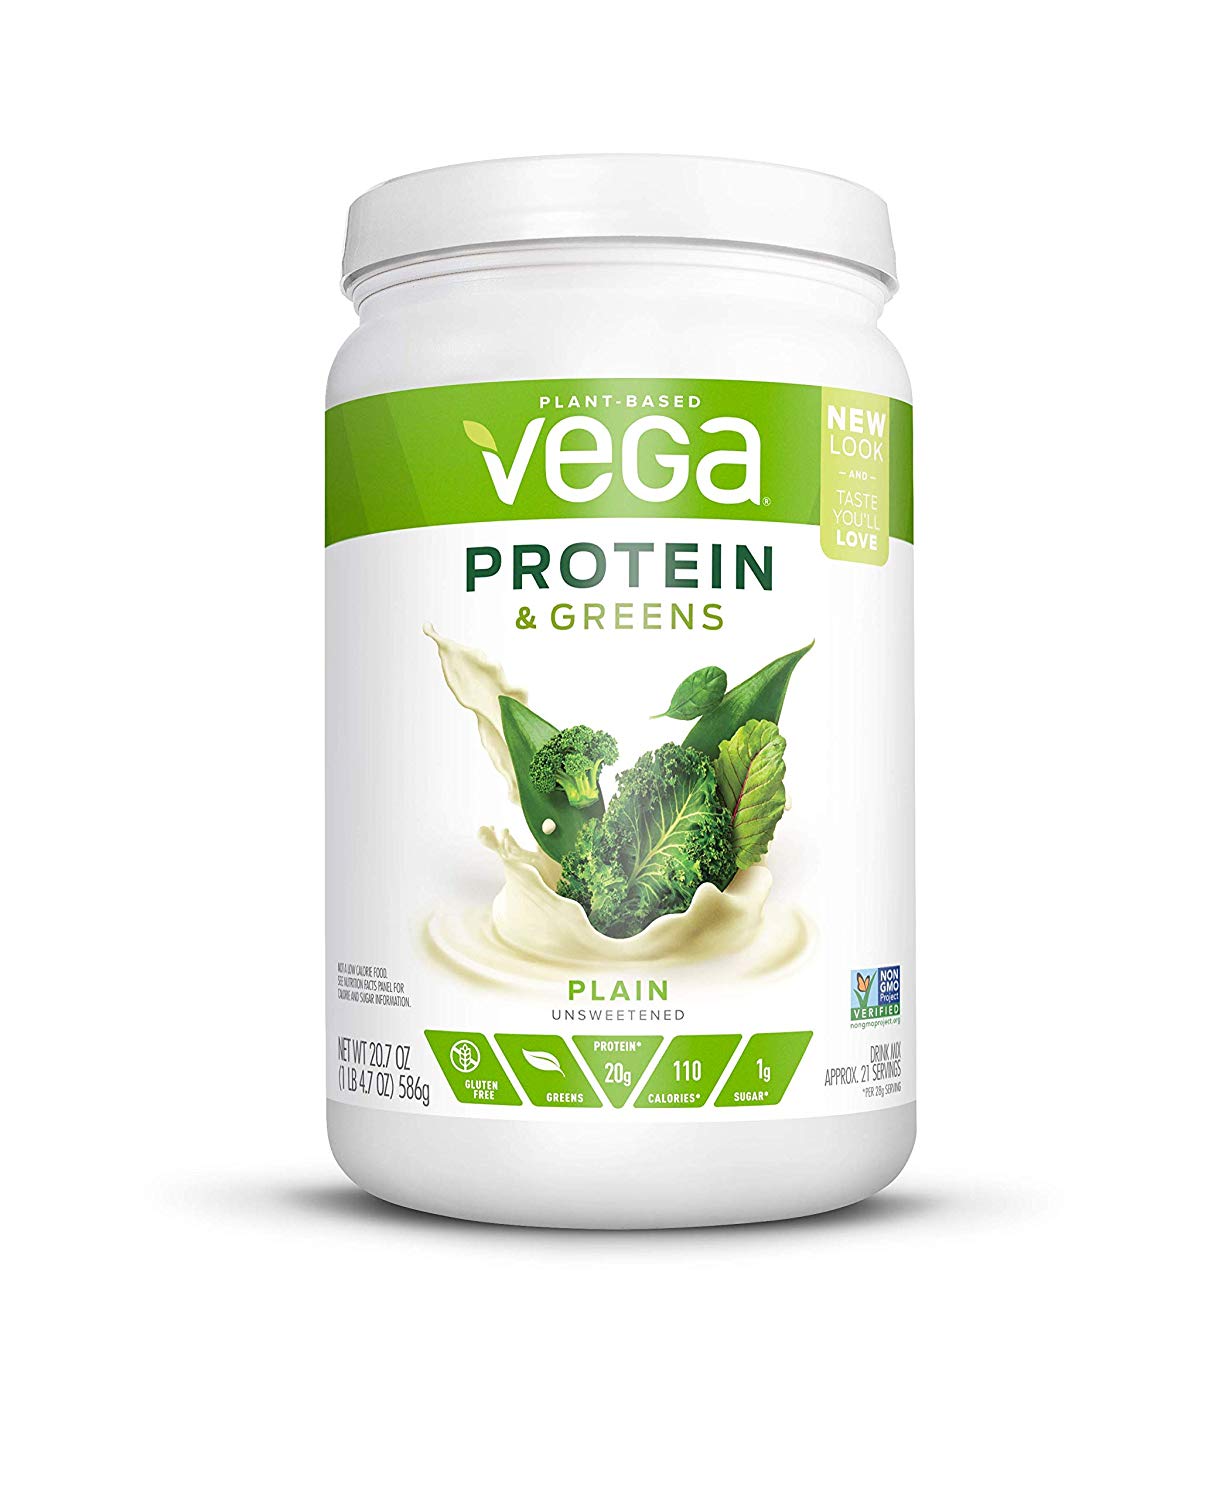 Vega Protein & Greens Plain Unsweetened- Plant-Based Protein Powder